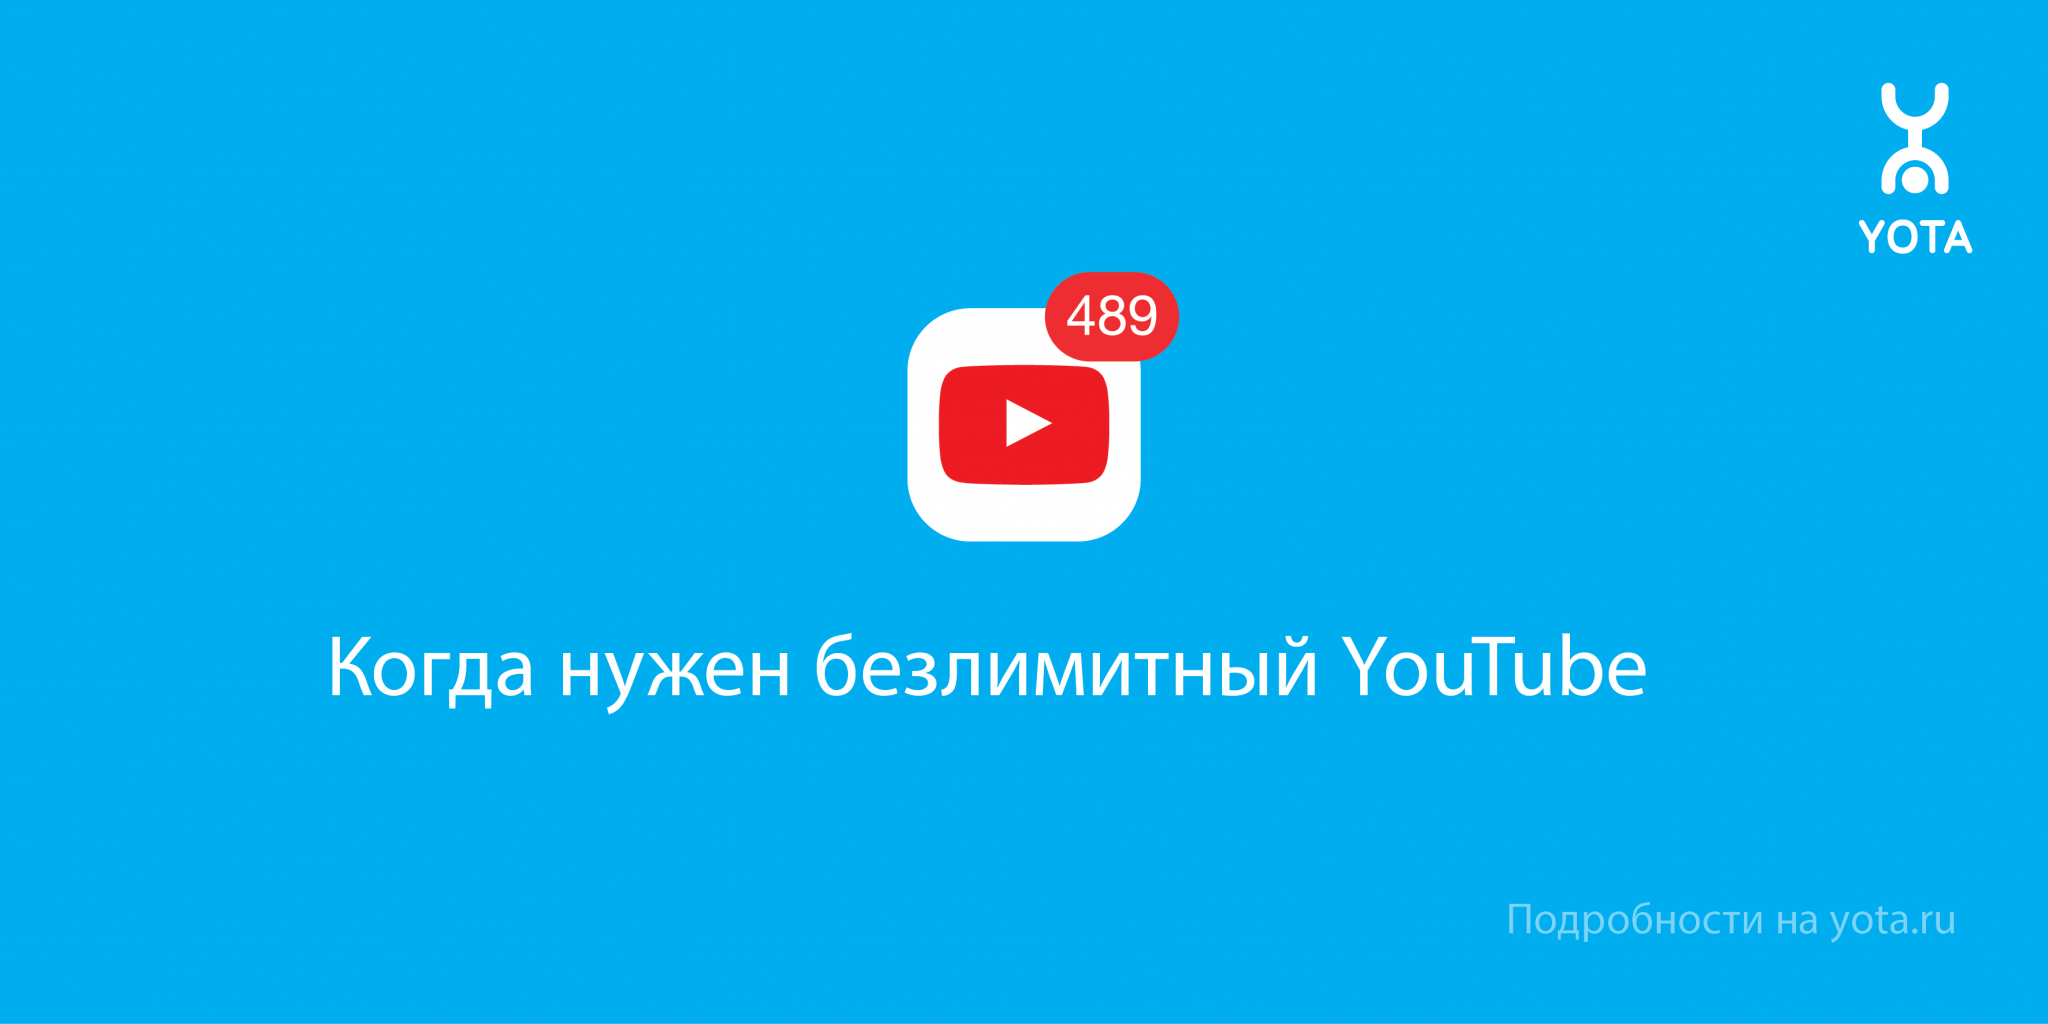 Yota предлагает месяц безлимитного YouTube